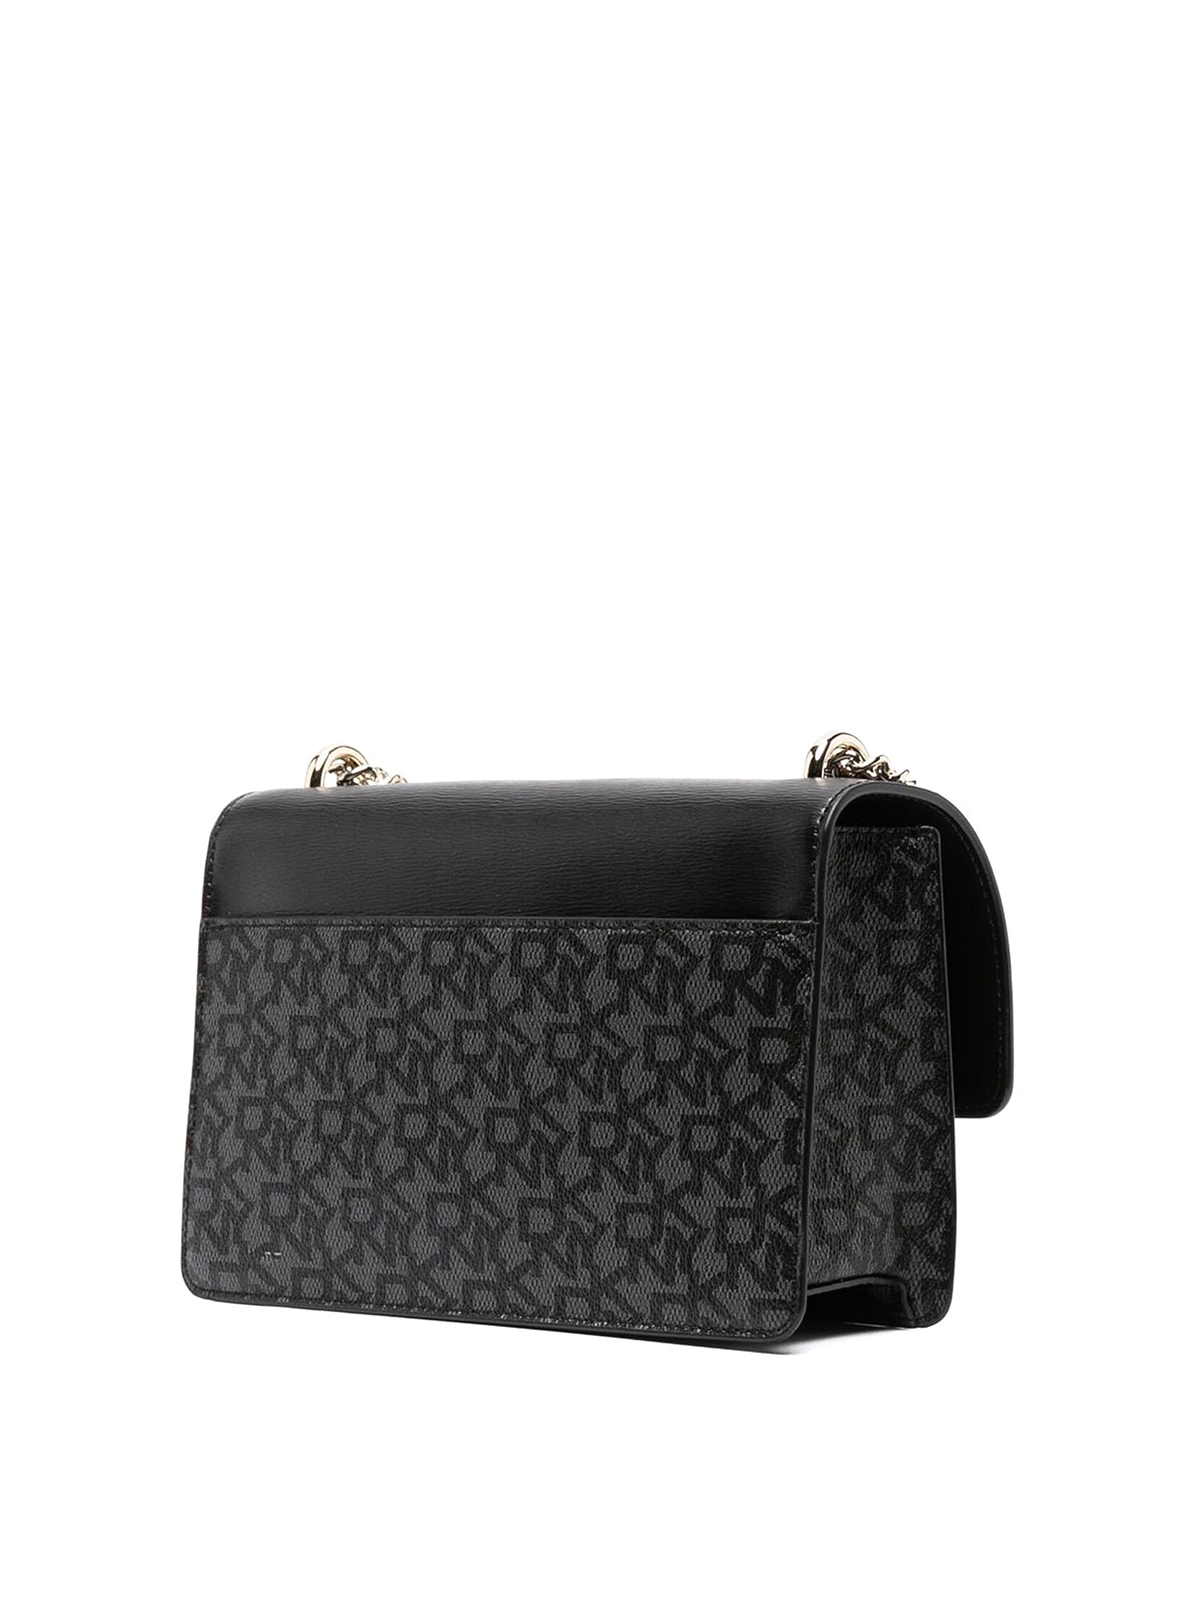 DKNY Handbags, Shoes, Watches, Wallets & more